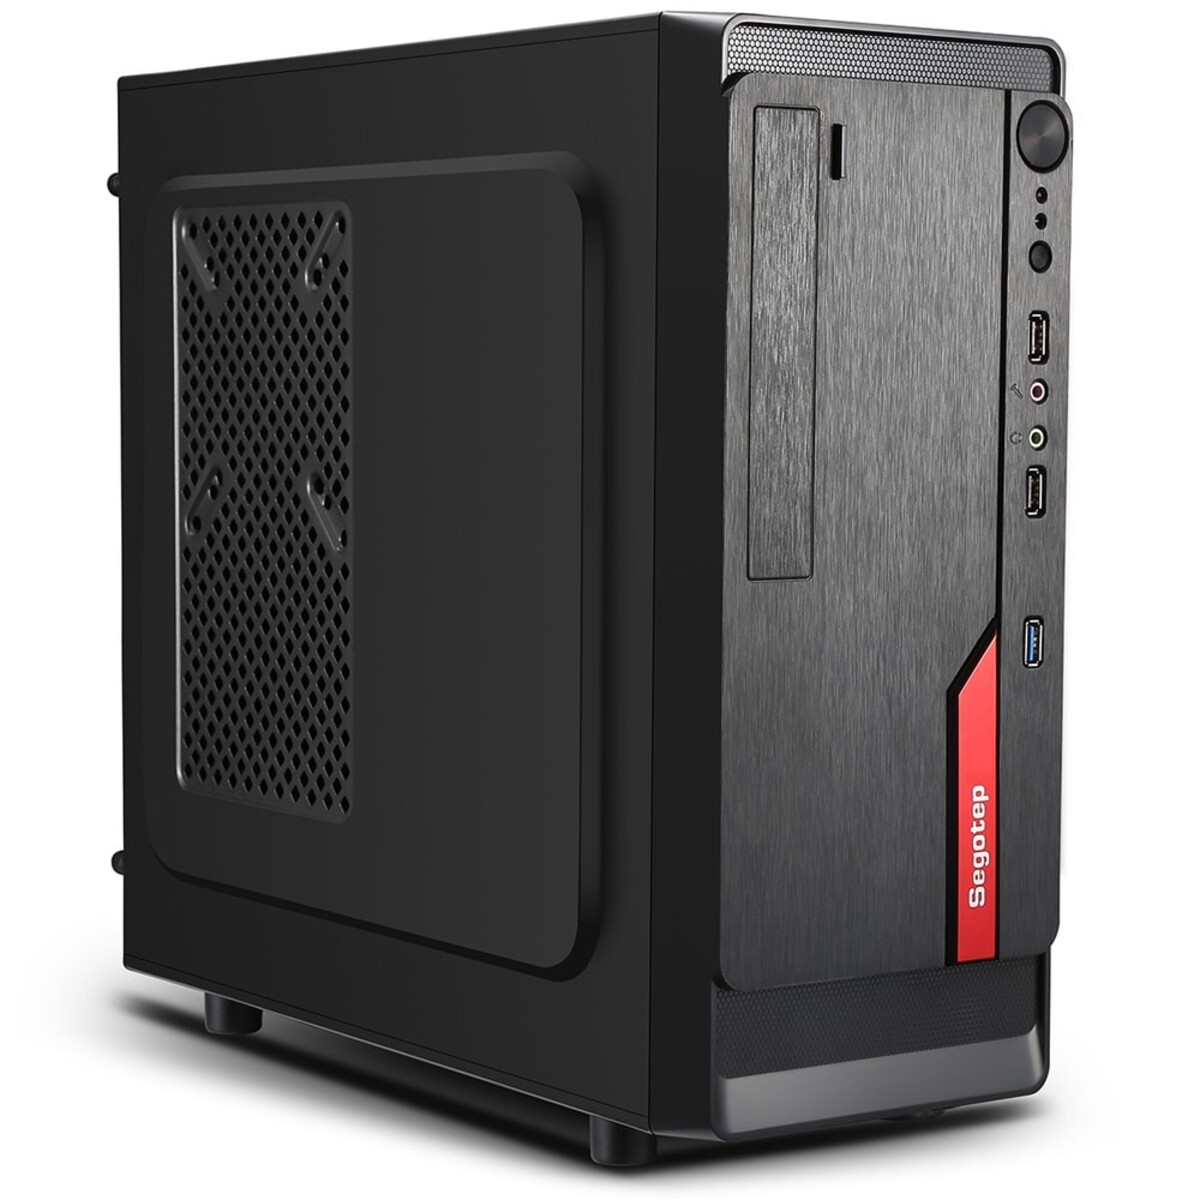 Sistem Ultra low power/buget cu AMD Athlon 200GE si Solus OS 3